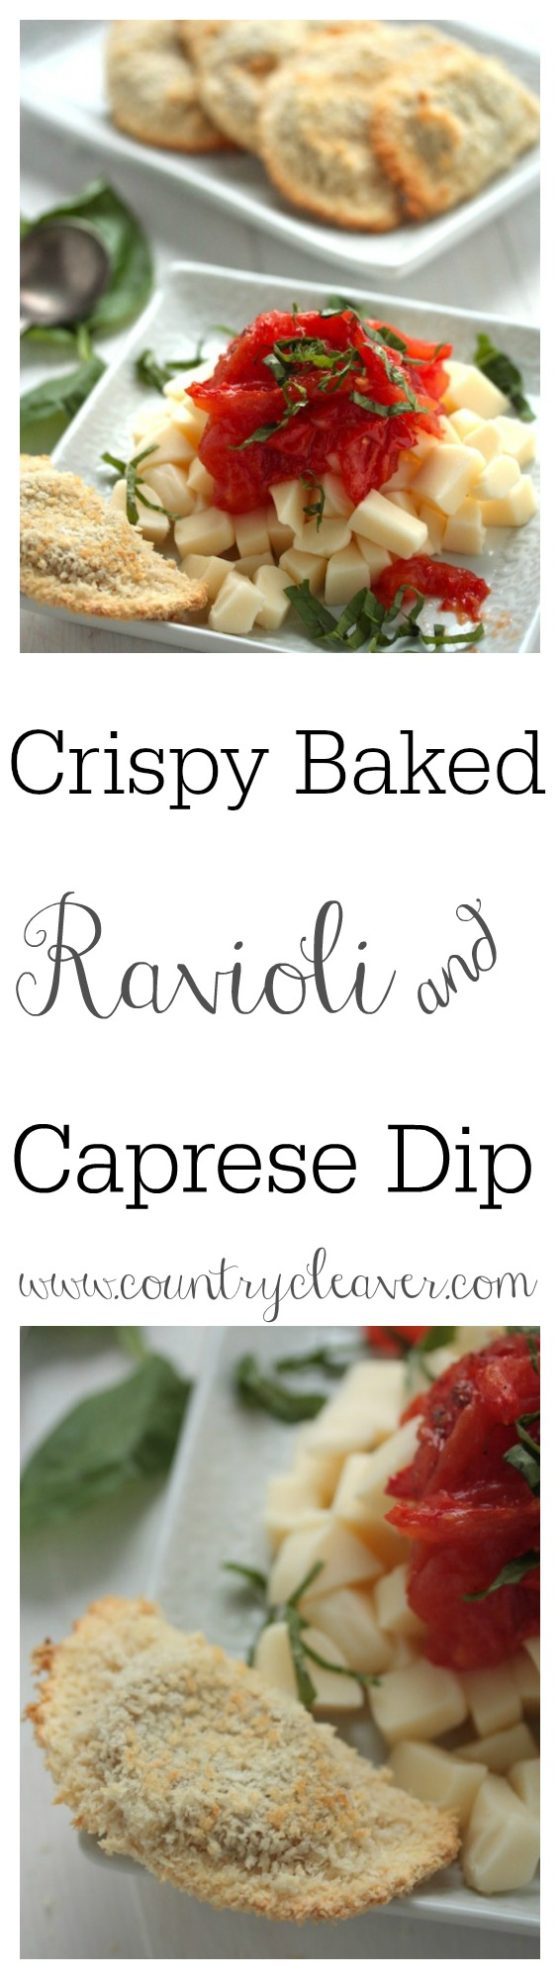 Crispy Baked Ravioli and Caprese Dip